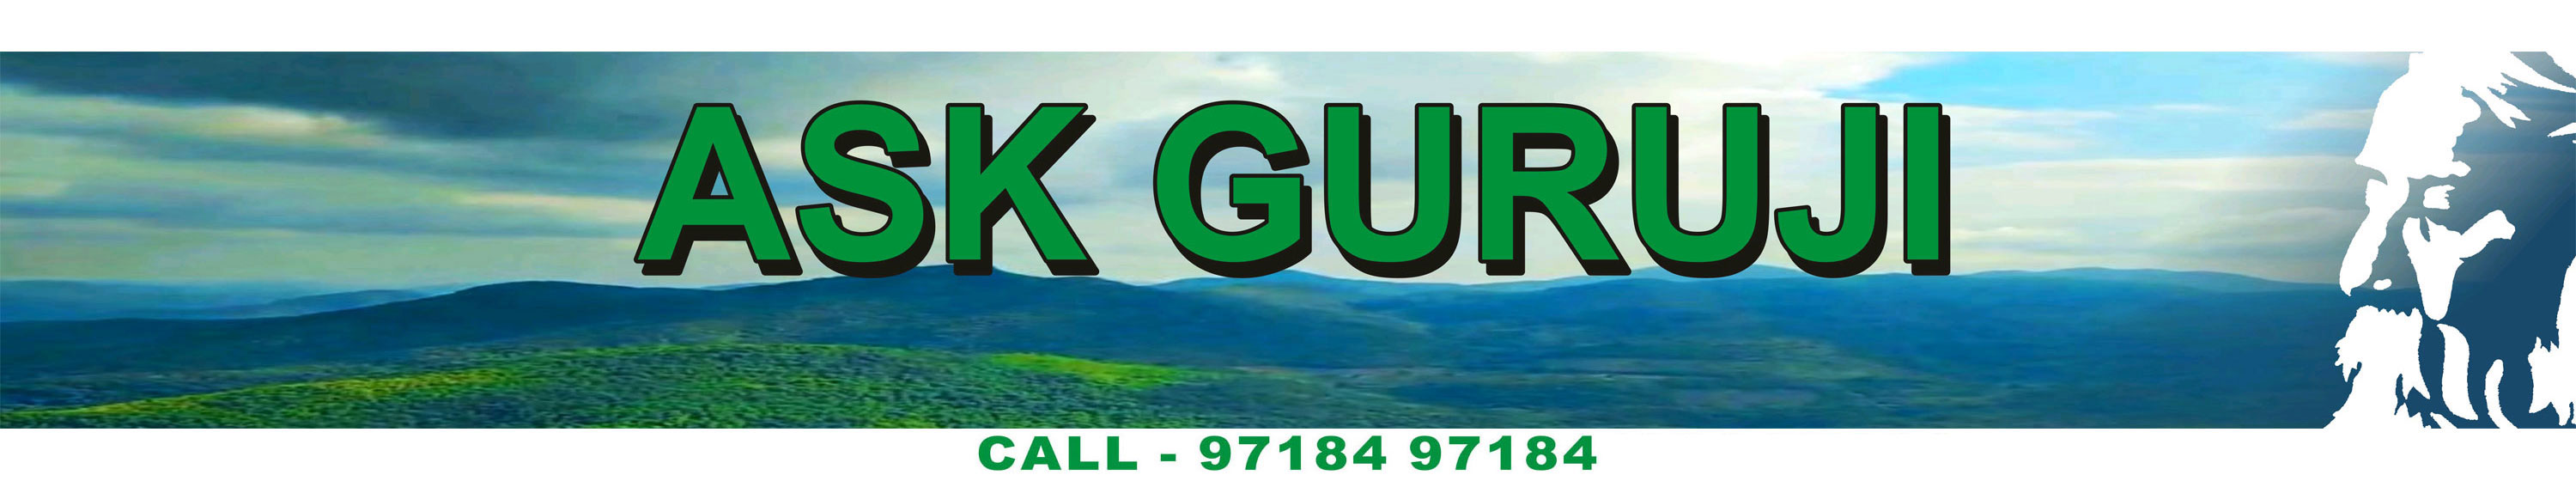 Ask guruji banner